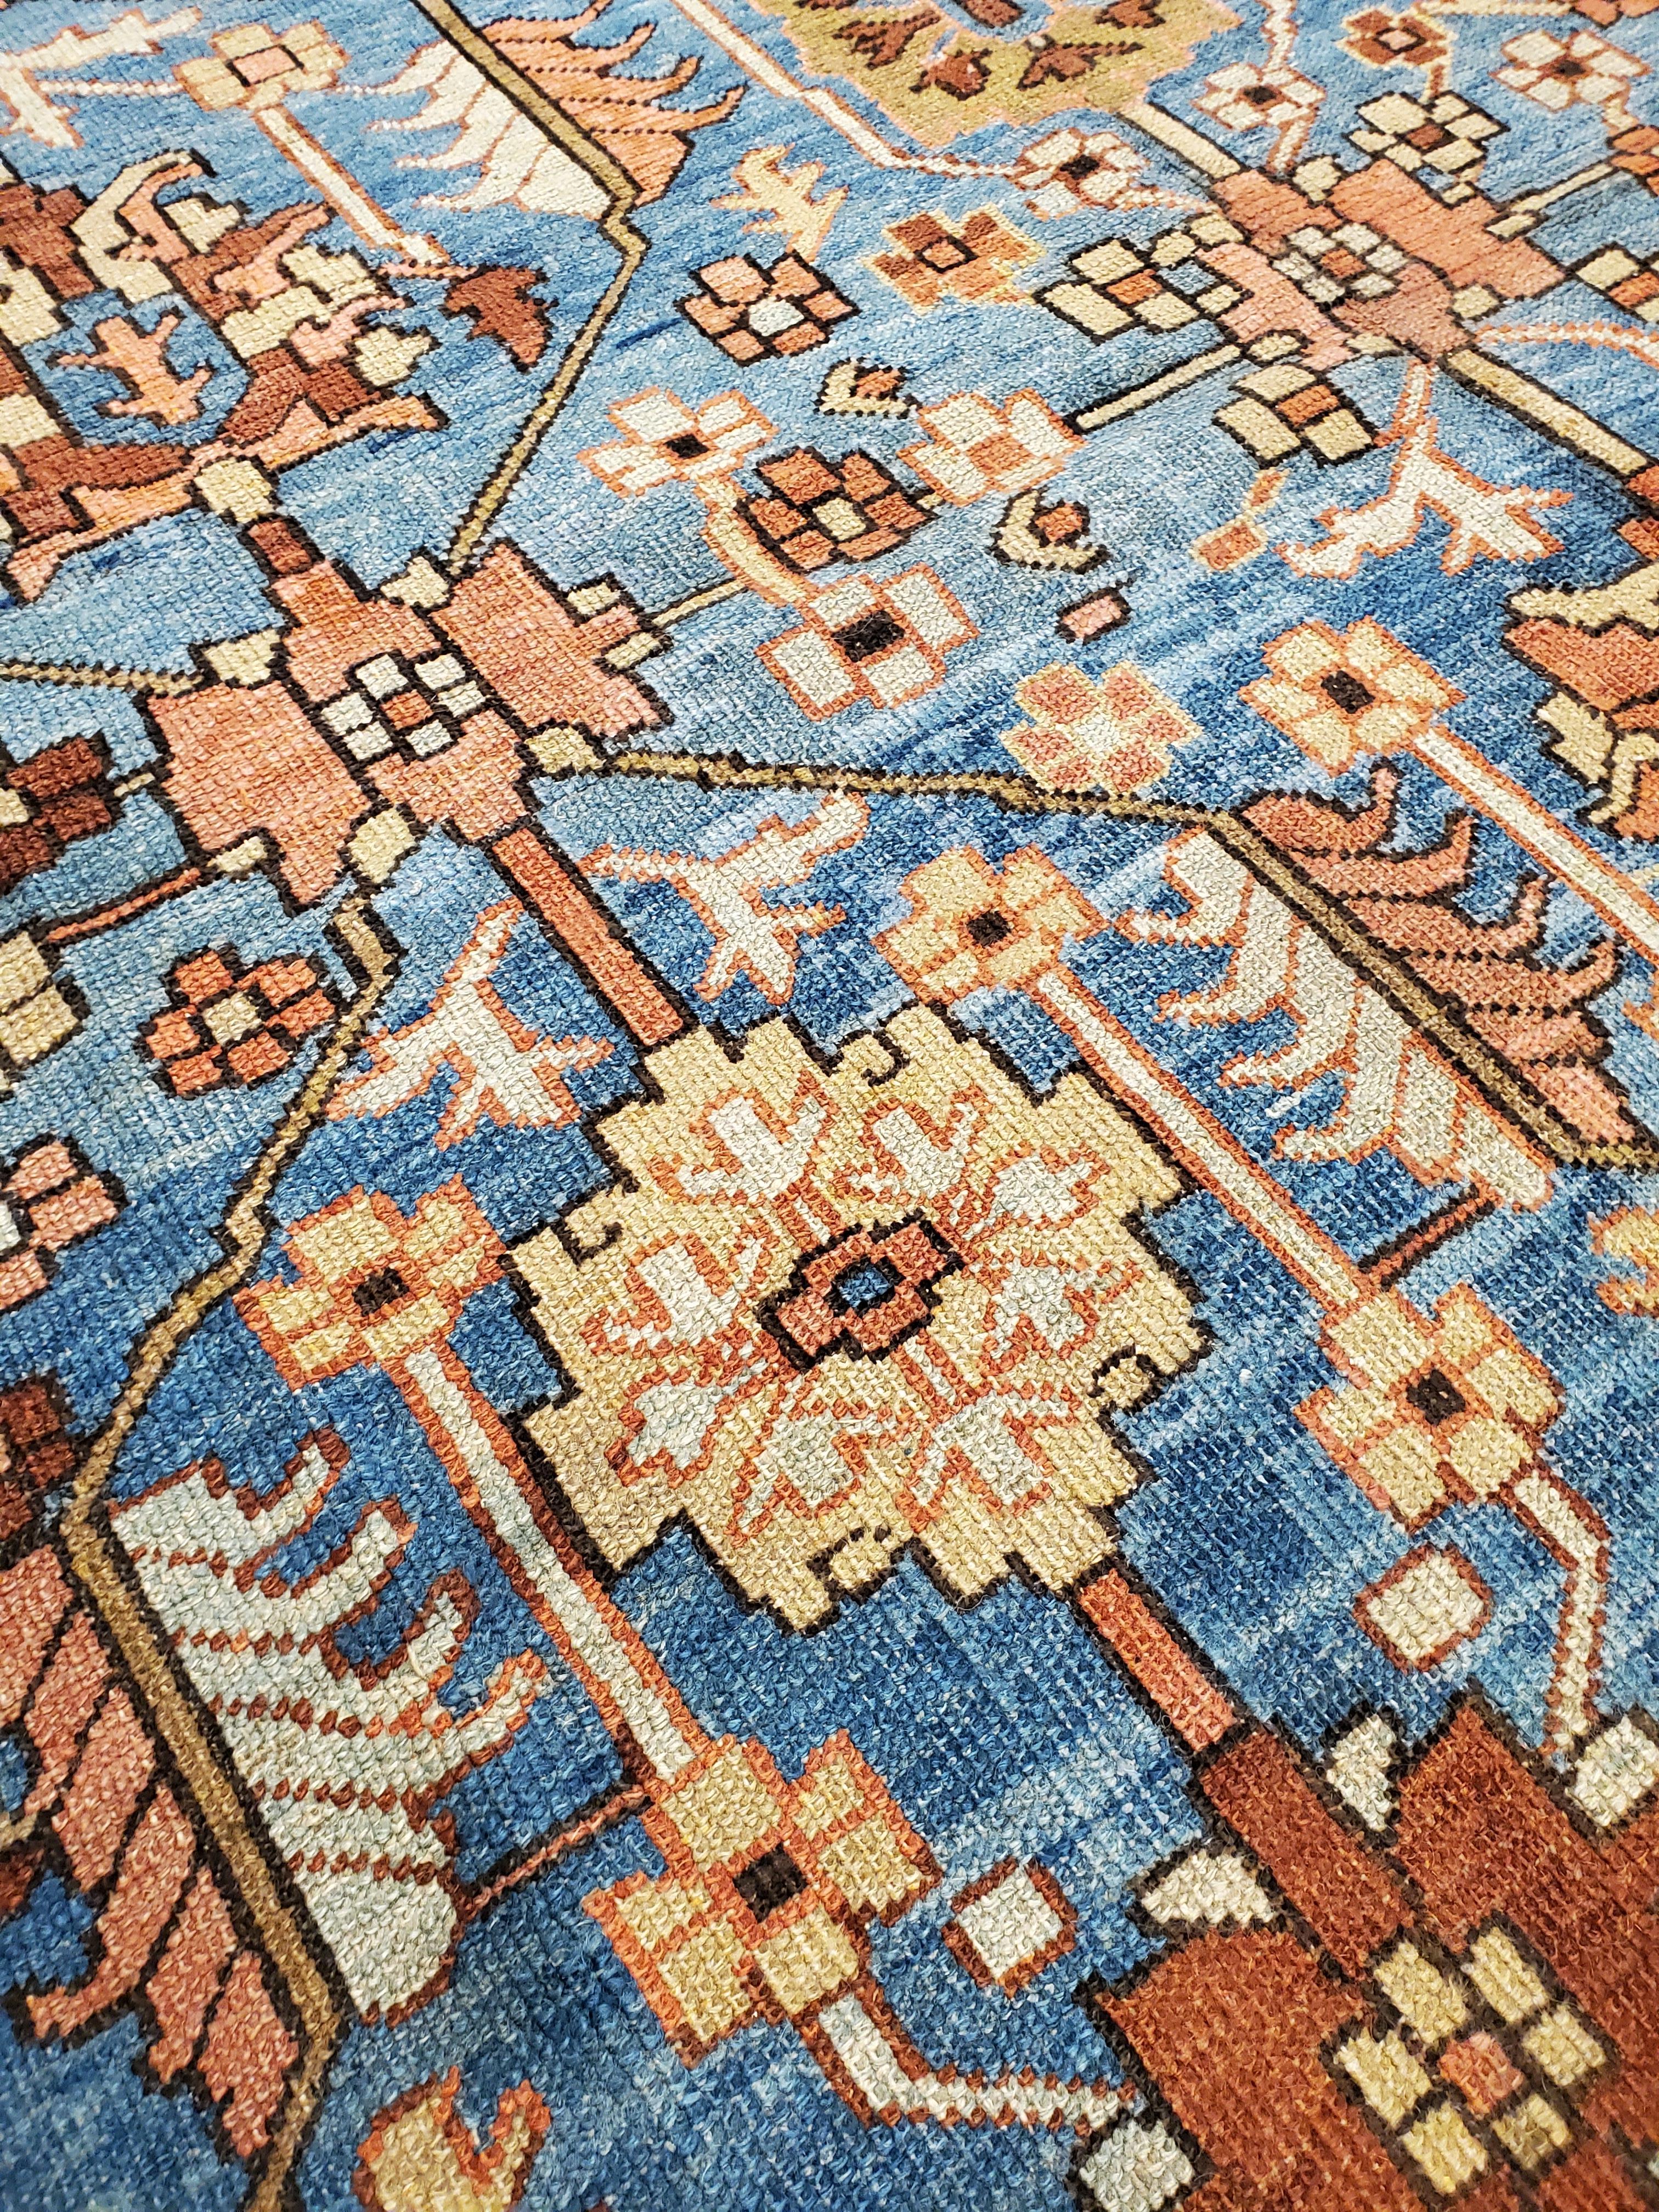 Antique Persian Serapi Carpet, Handmade Wool Oriental Rug, Rust and Light Blue 4